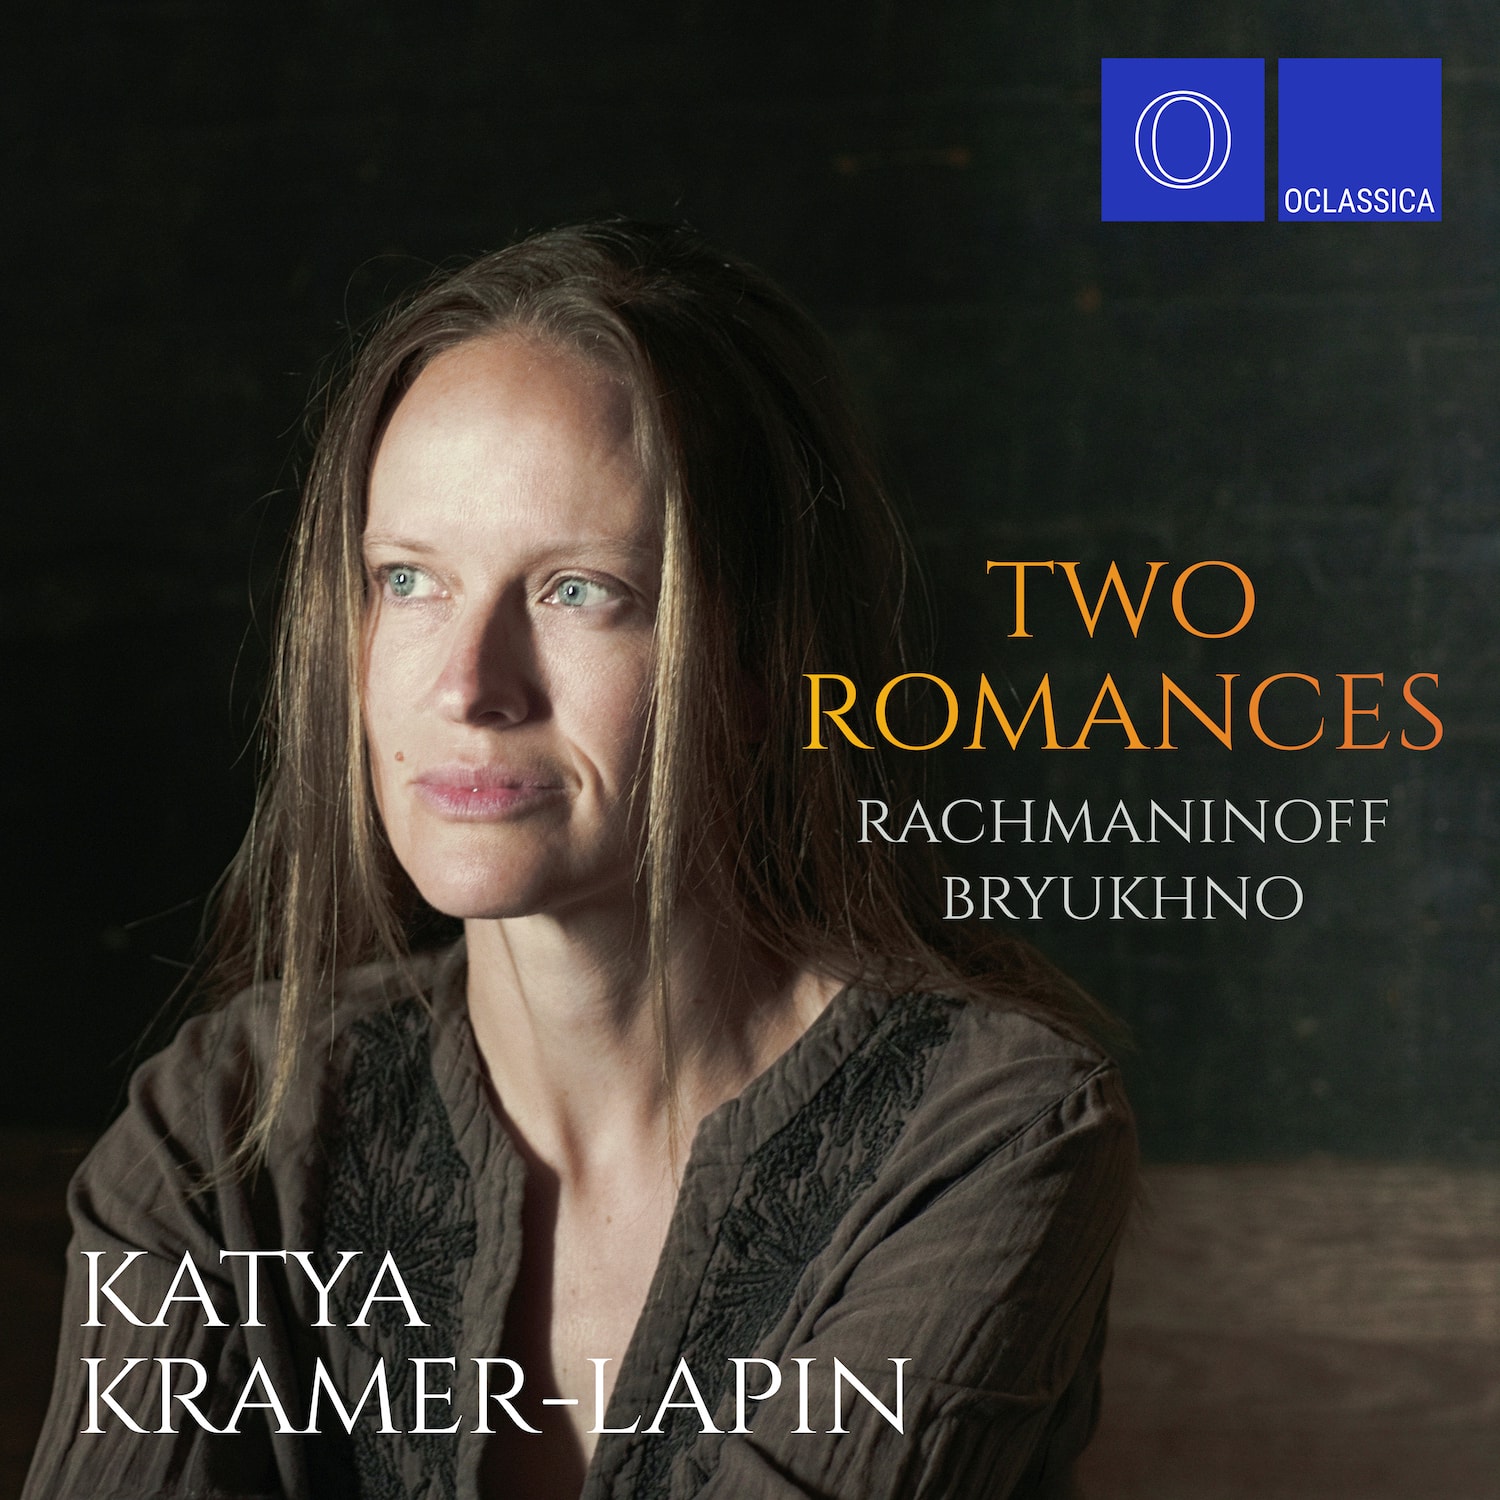 Rachmaninoff, Bryukhno: Two Romances